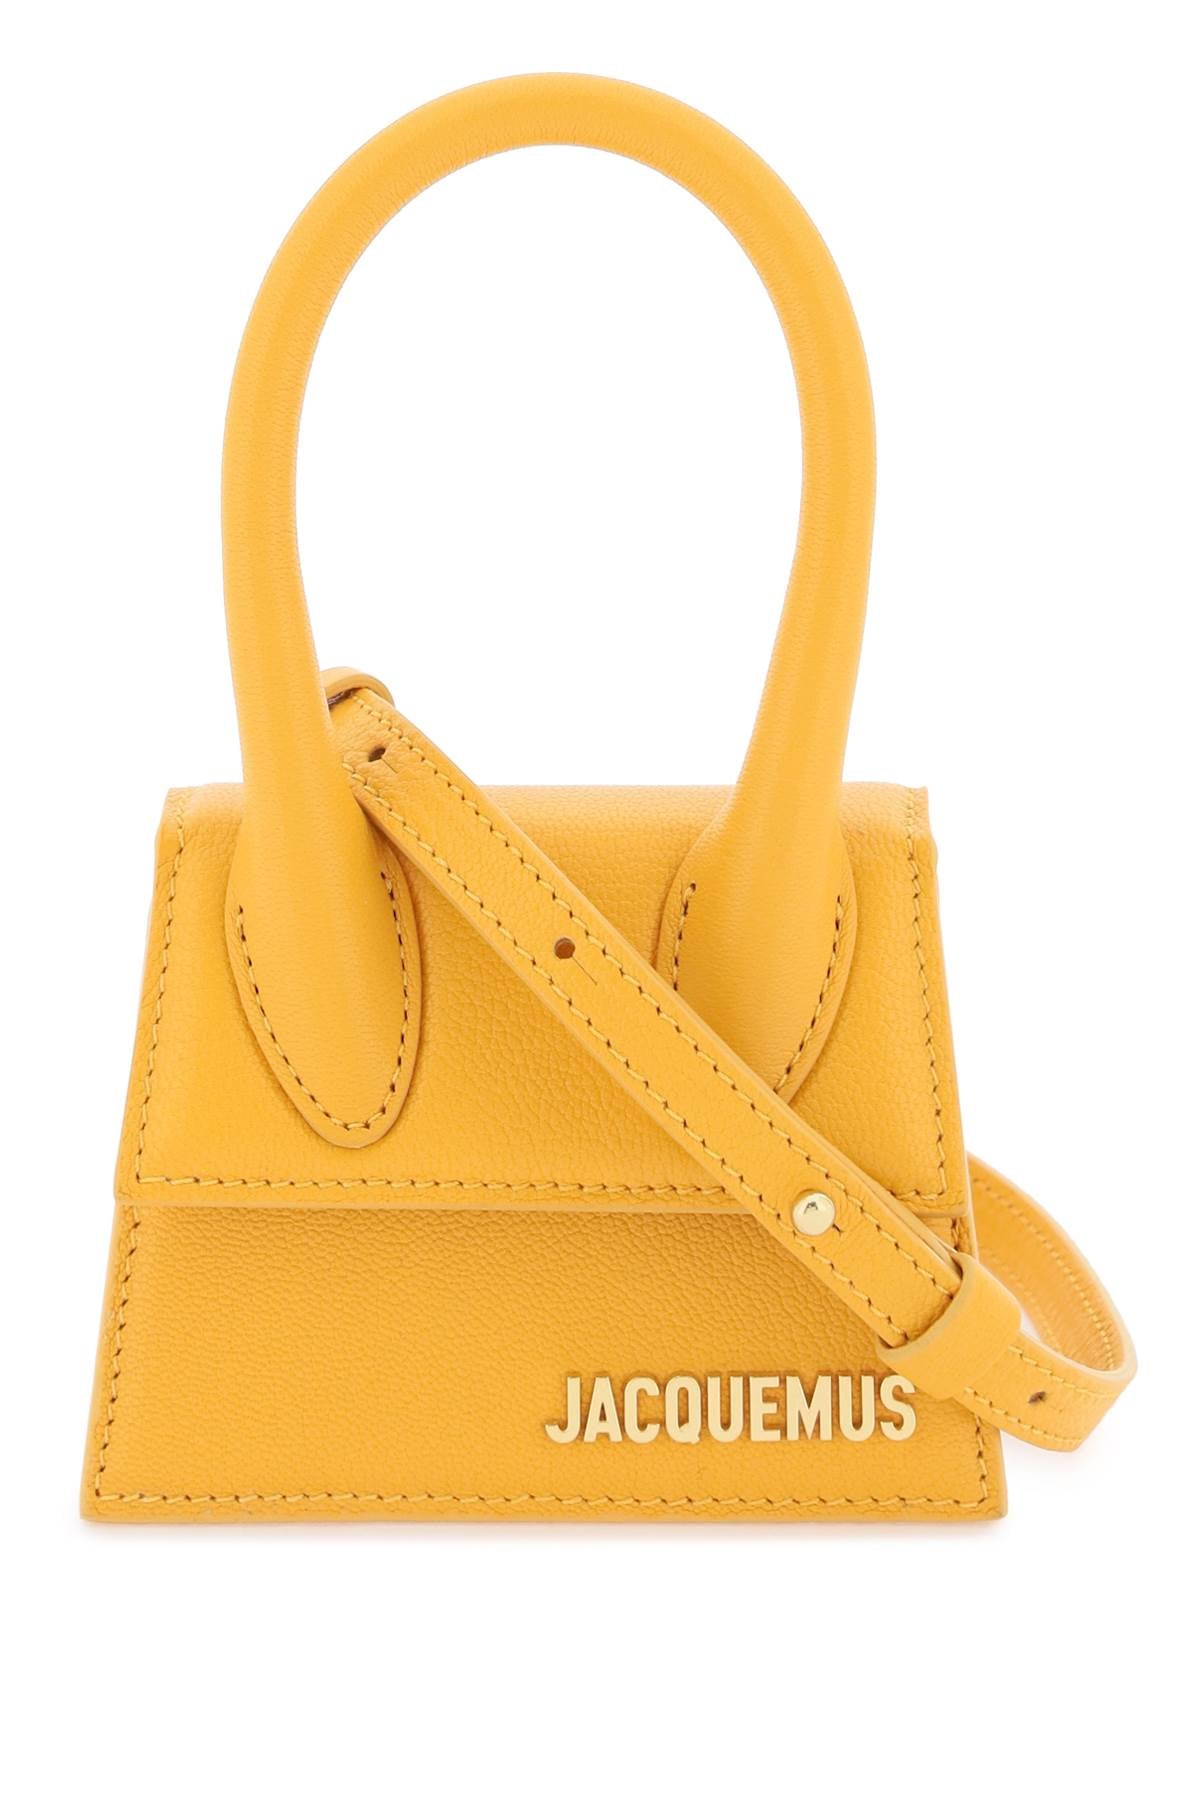 Jacquemus Fashionable Orange Leather Clutch Bag For Women